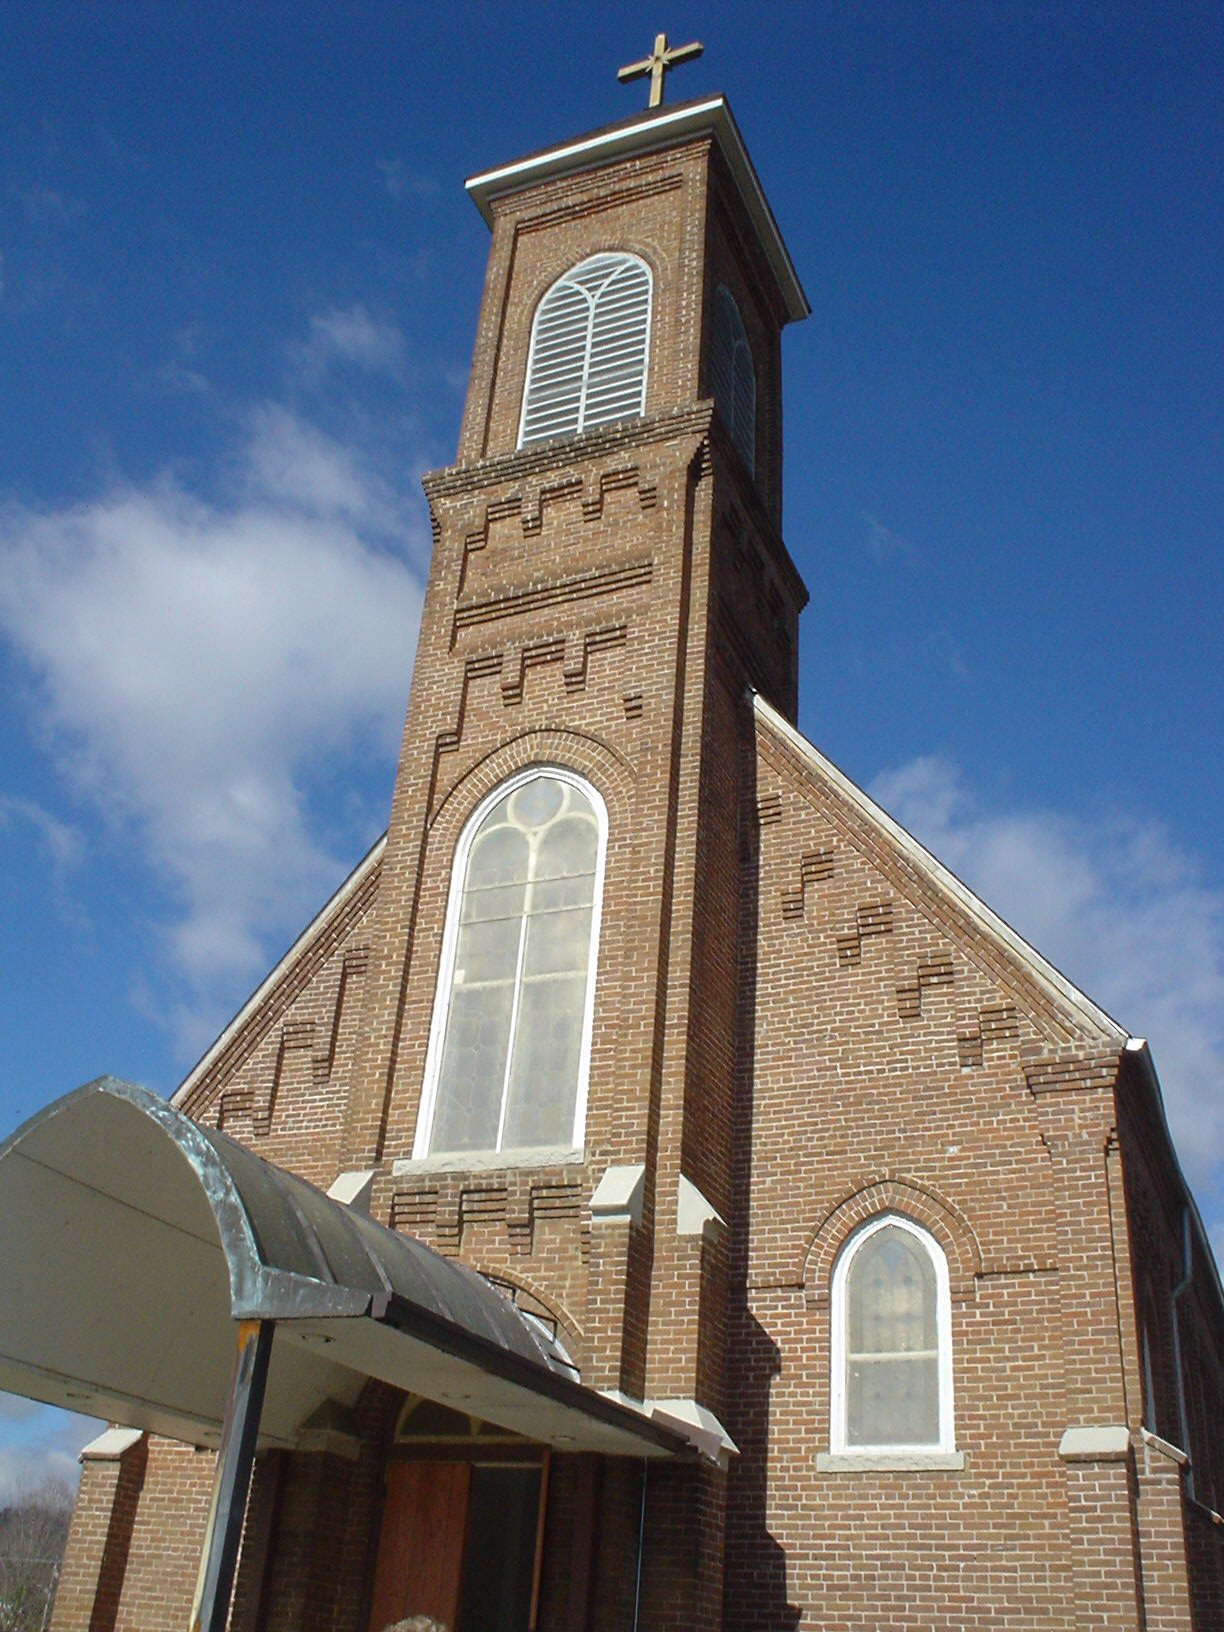 an old church with a steeple under a blue sky